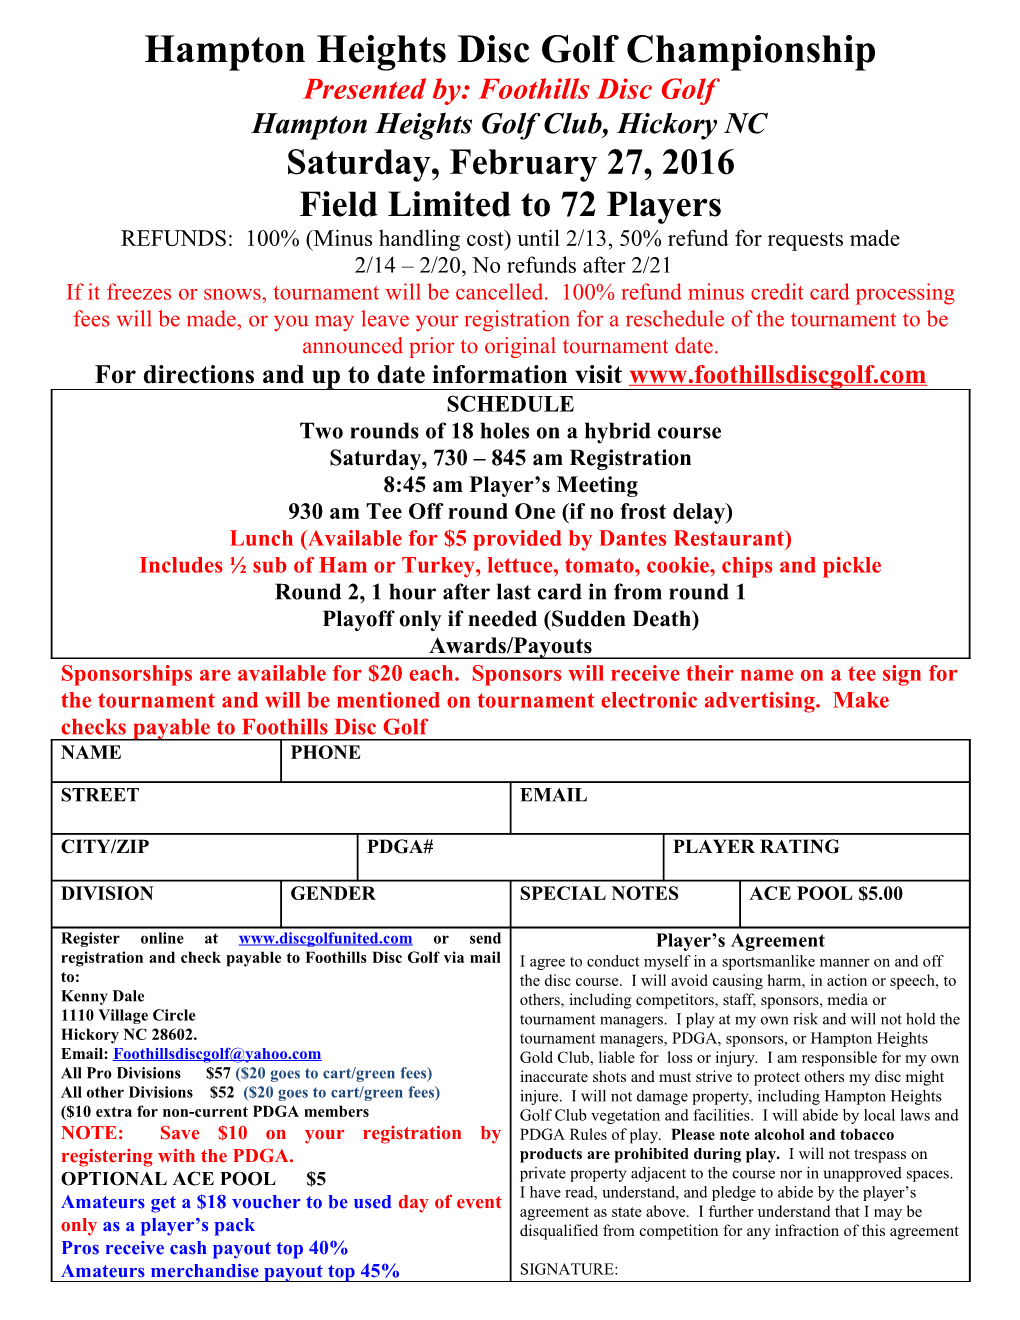 2014 Foothills Disc Golf Championship